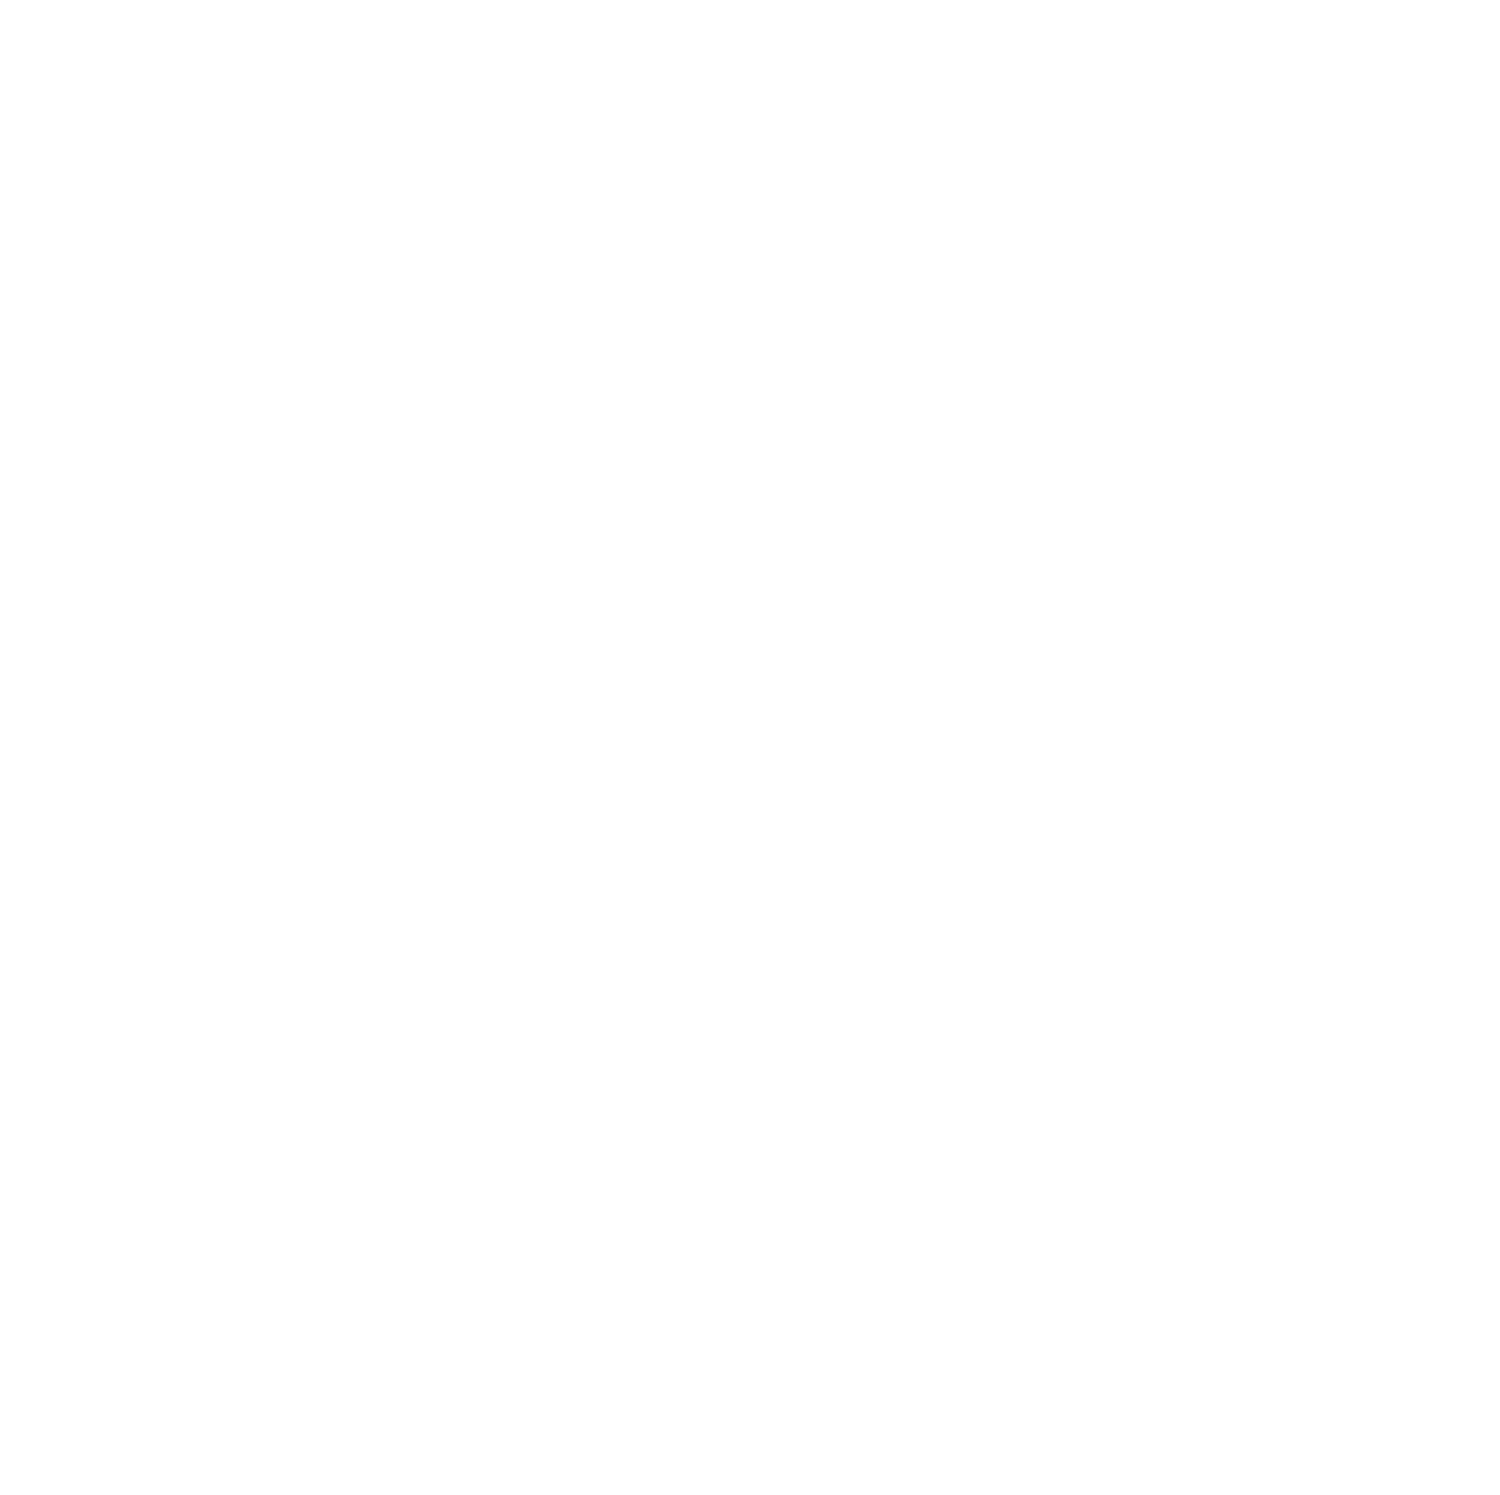 LRSA